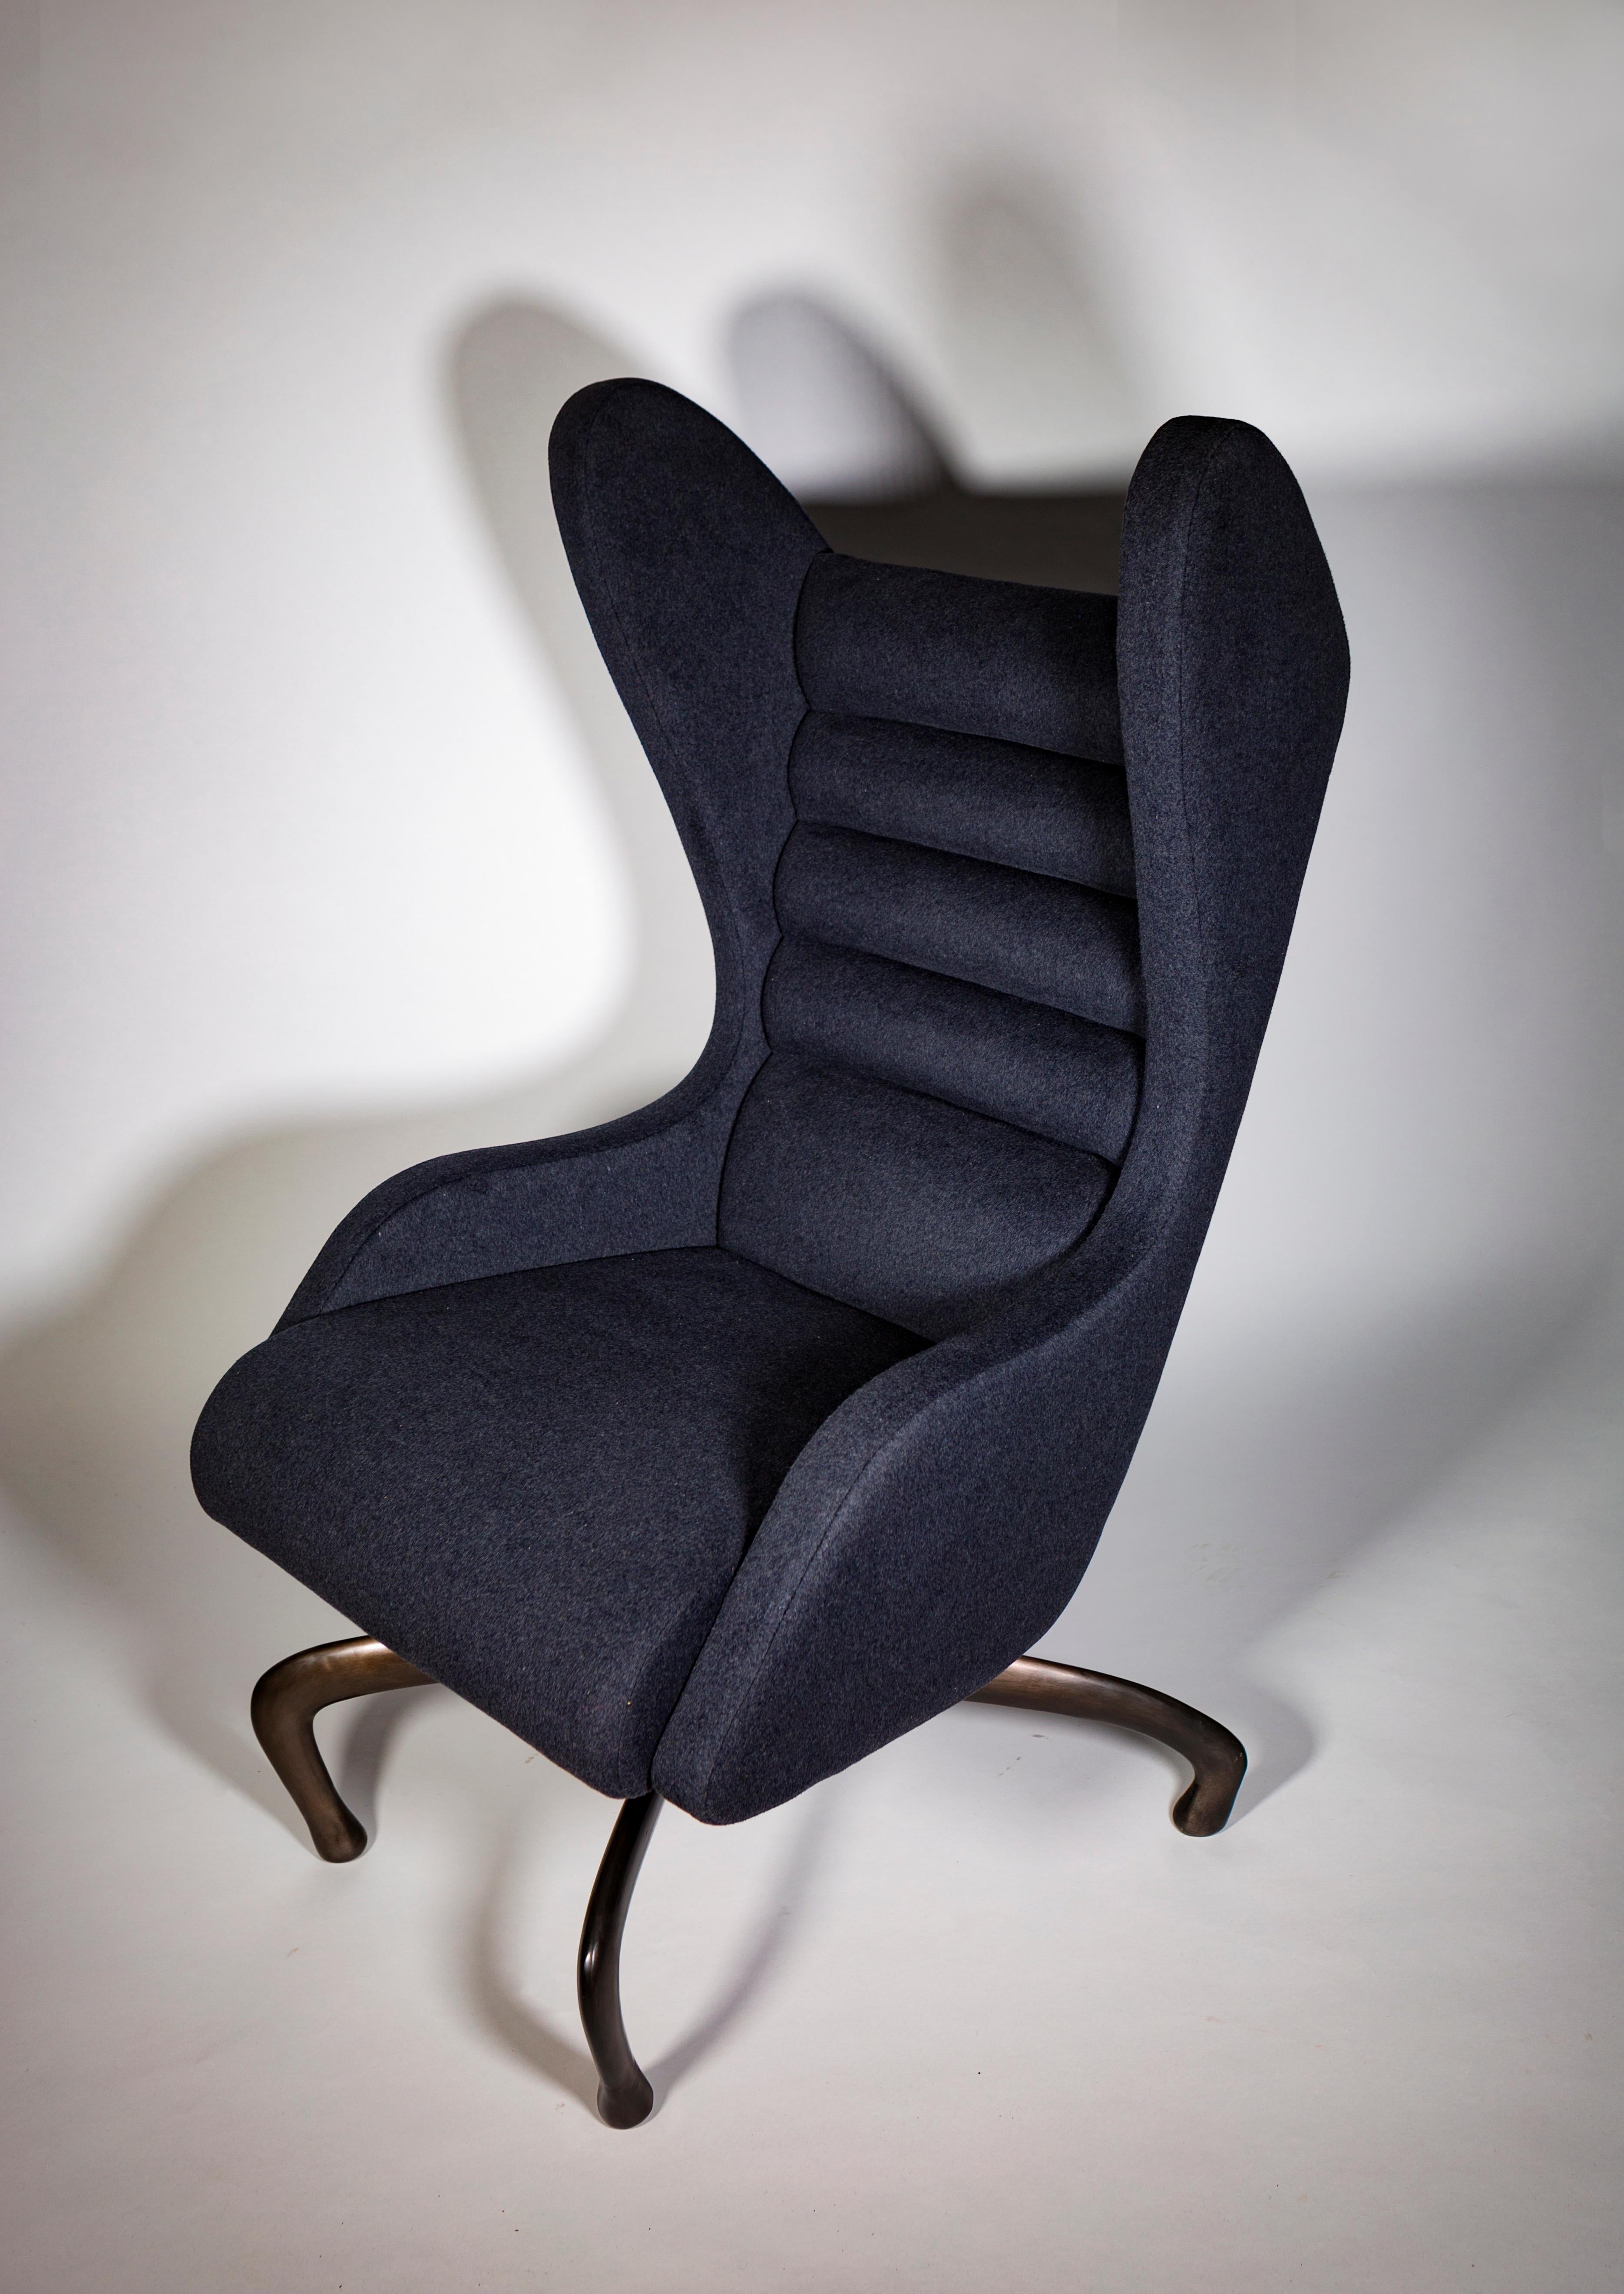 Cantering Lounge Chair, Leather / Cast Aluminium, Jordan Mozer, USA, 2003-2018 For Sale 2